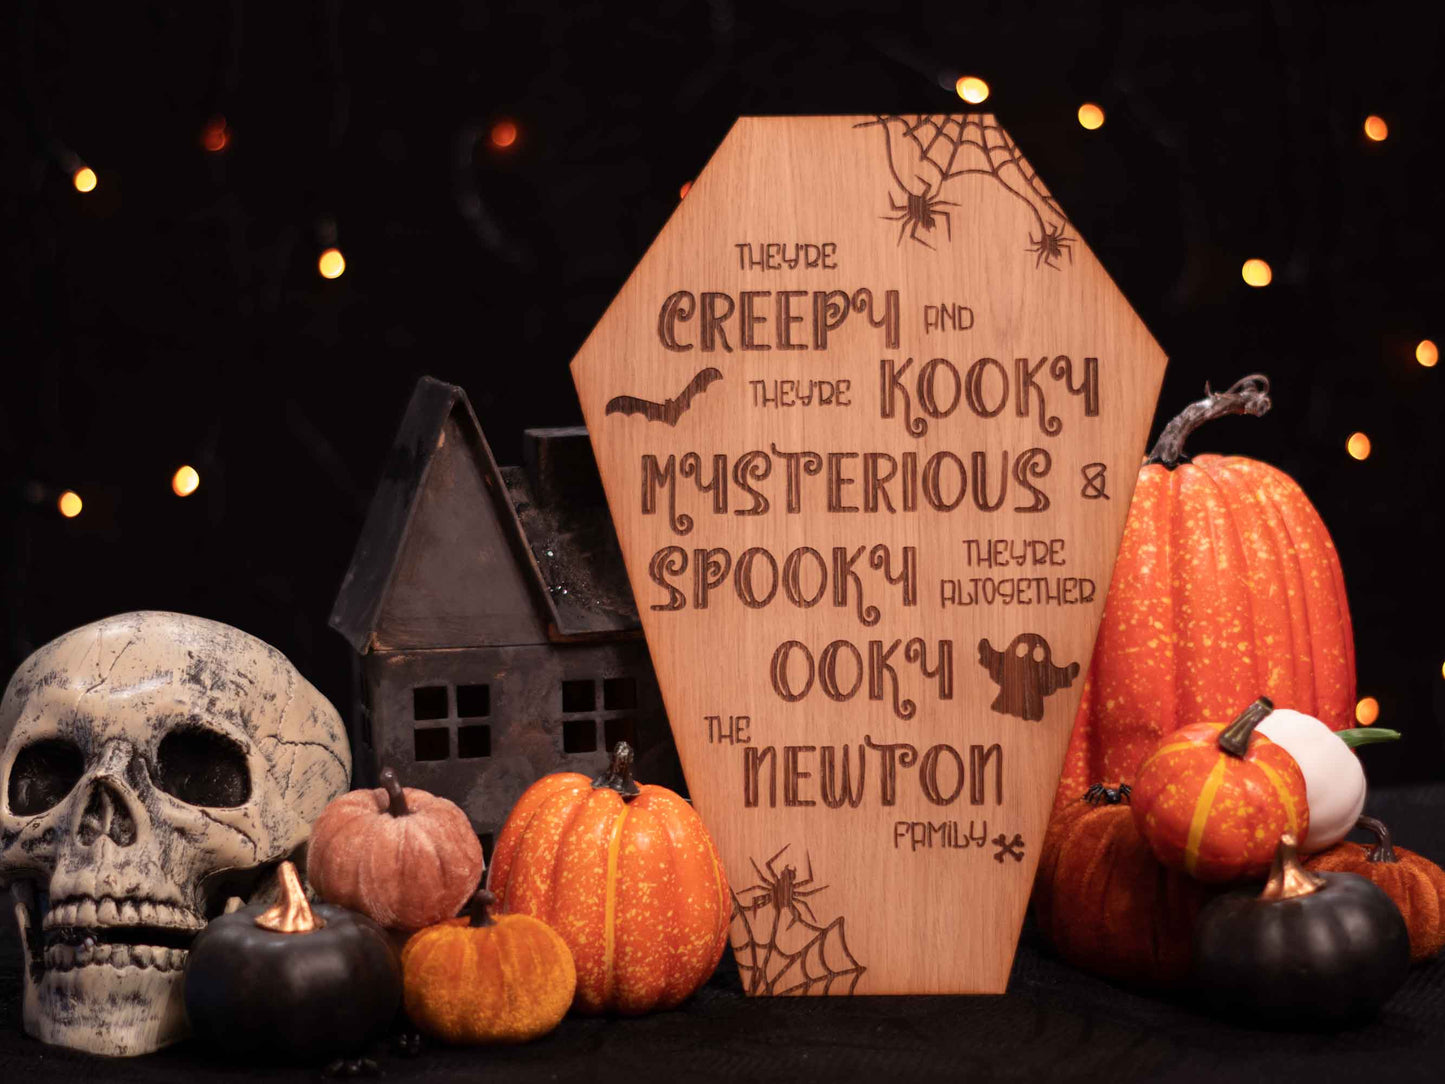 Halloween Creepy and Kooky sign